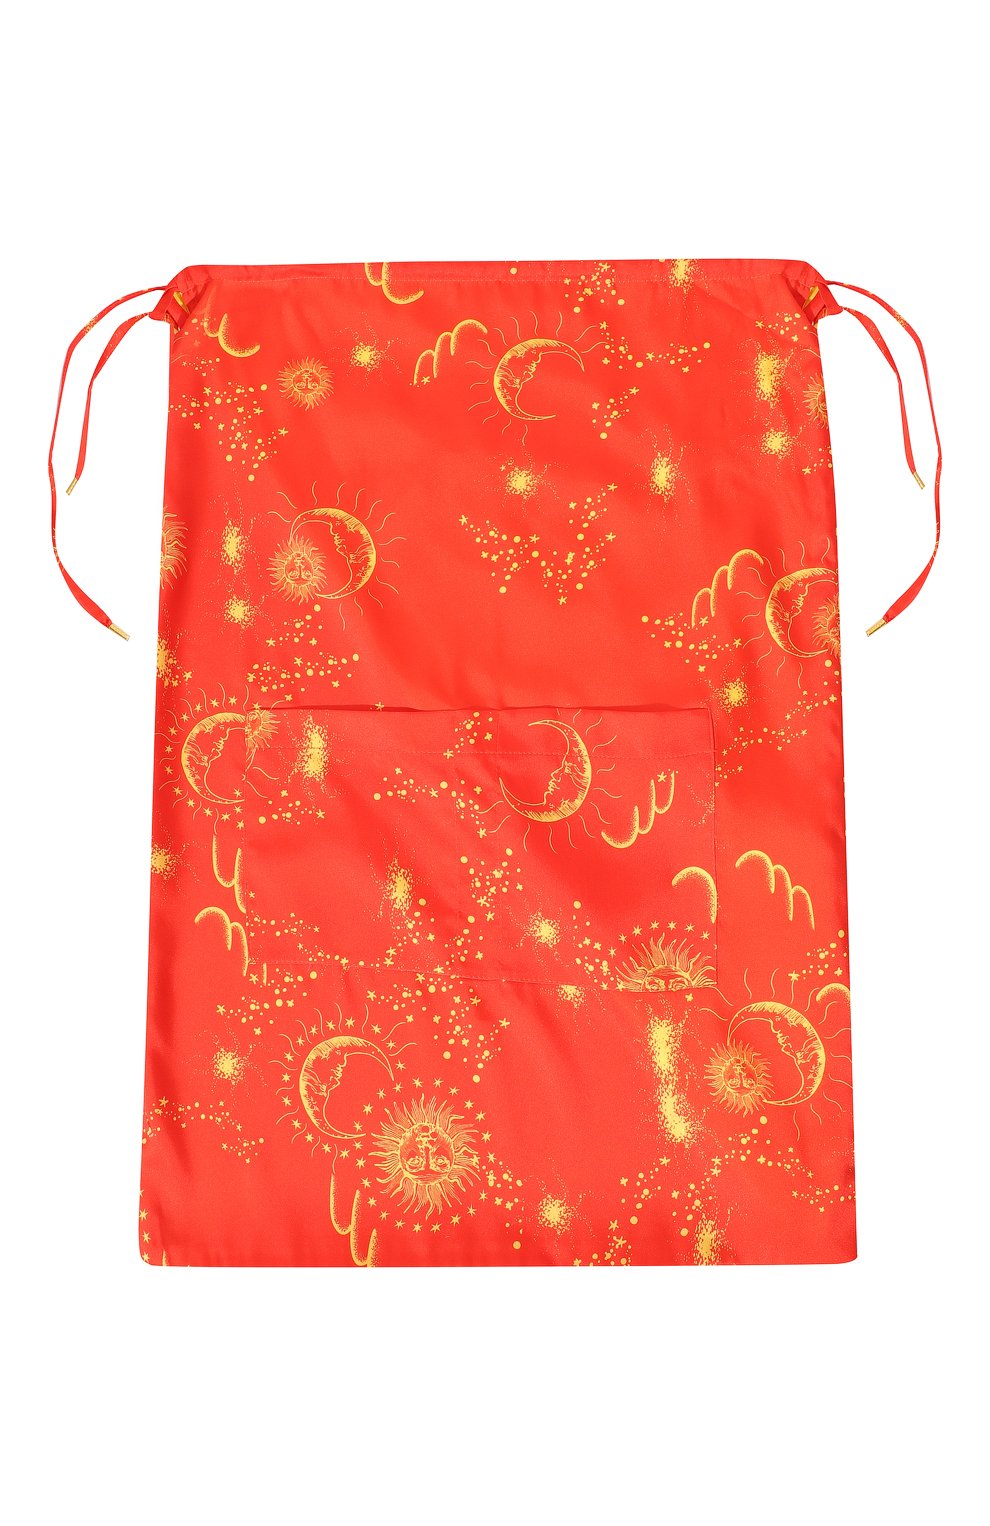 Женские мешок для сумки-тоут LÉAH красного цвета, арт. A024Н | Фото 1 (Материал: Текстиль)